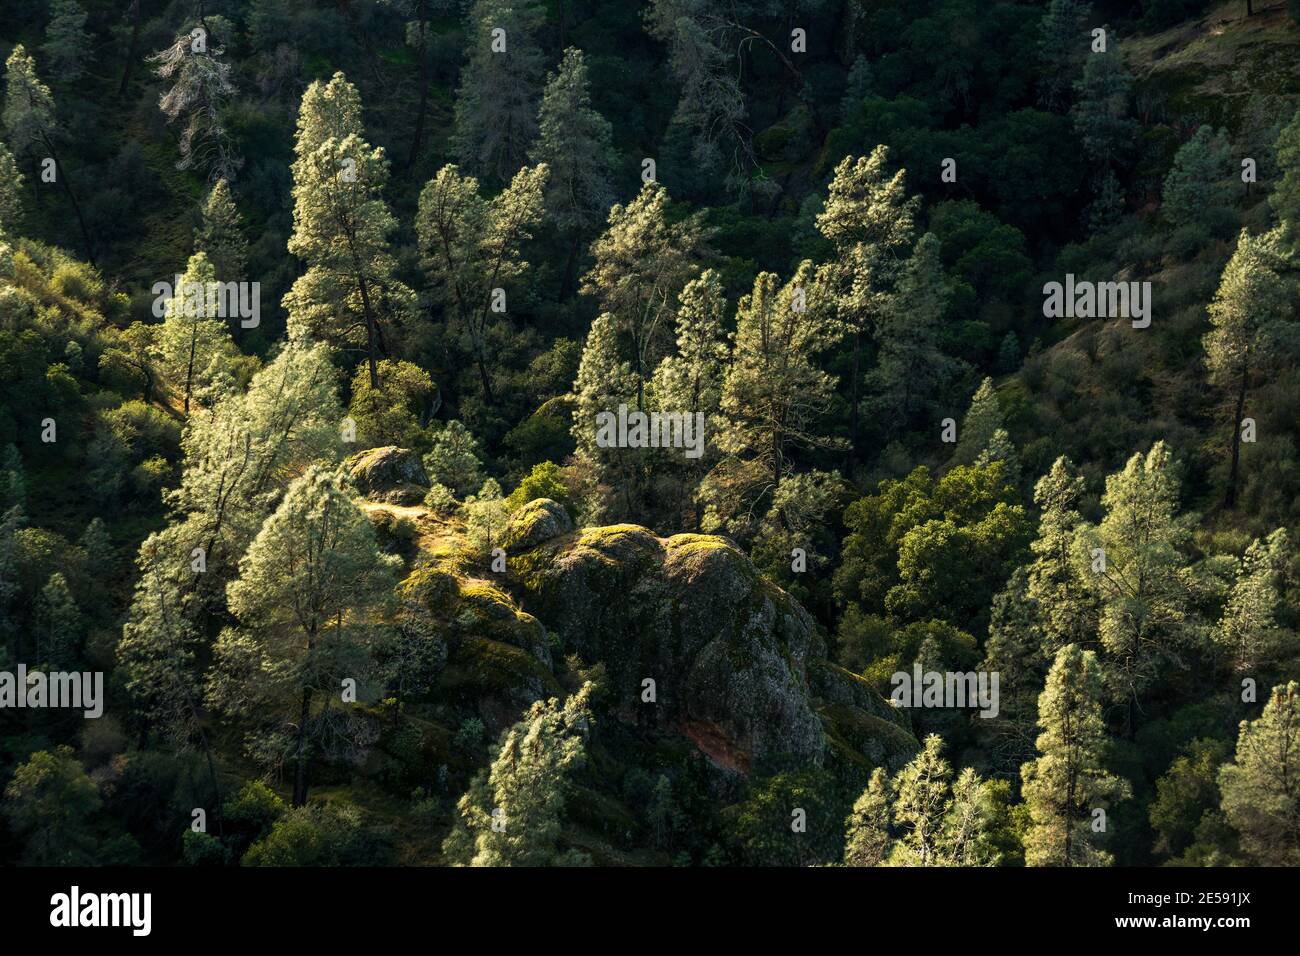 The endemic to California, the Gredy Pine (Pinus sabiniana) grows amid the rock formations at Pinnacles National Park SE of Salinas. Stock Photo